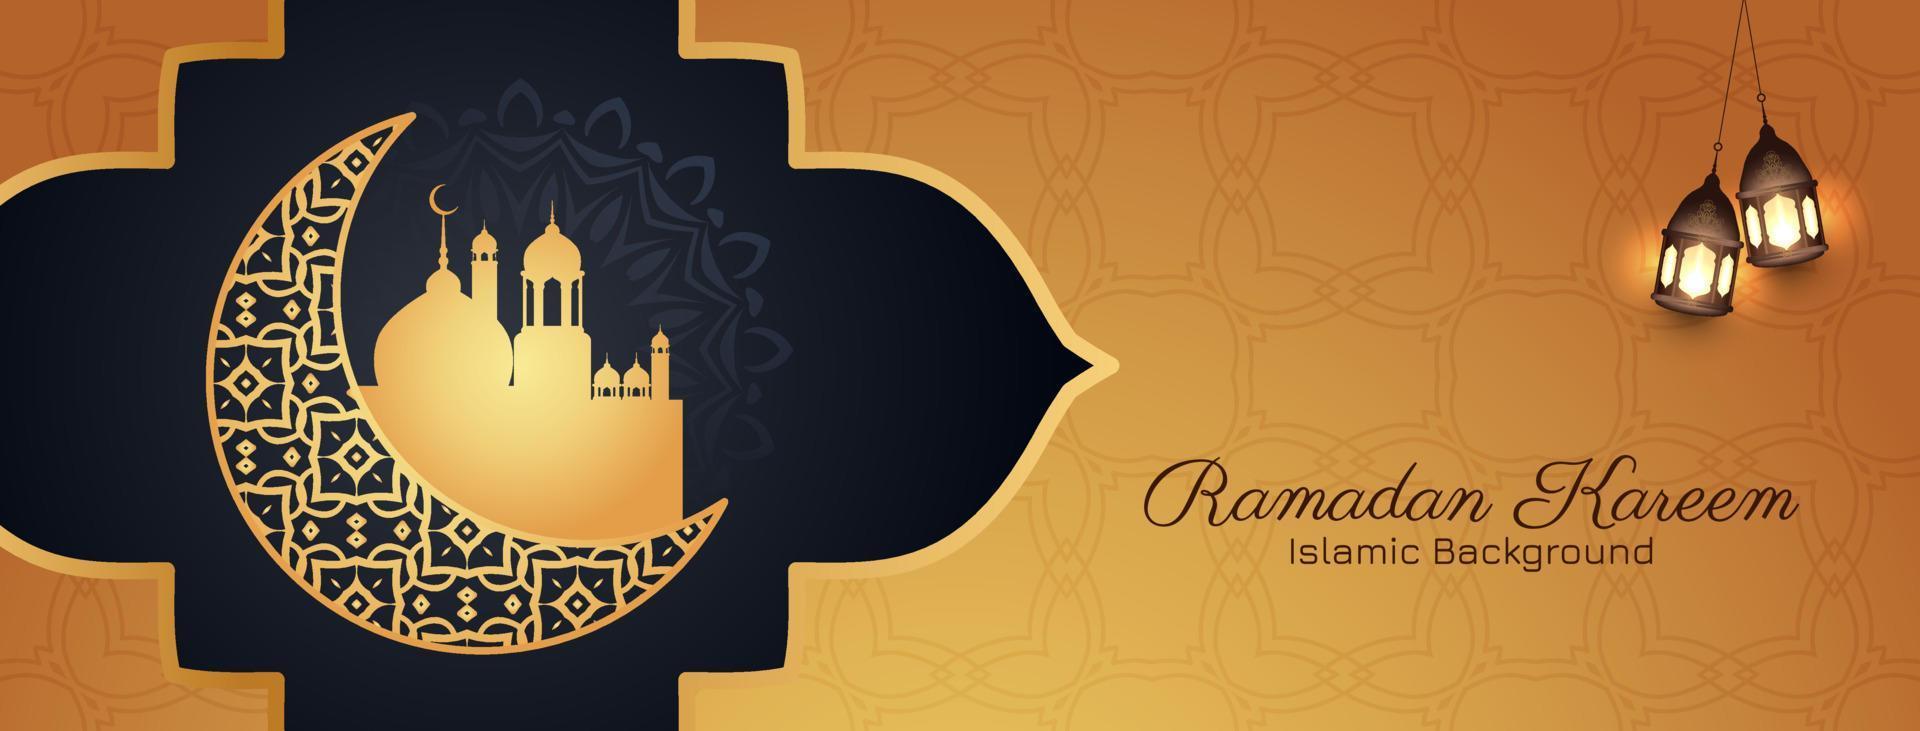 ramadan kareem festival islámico elegante diseño de banner decorativo vector